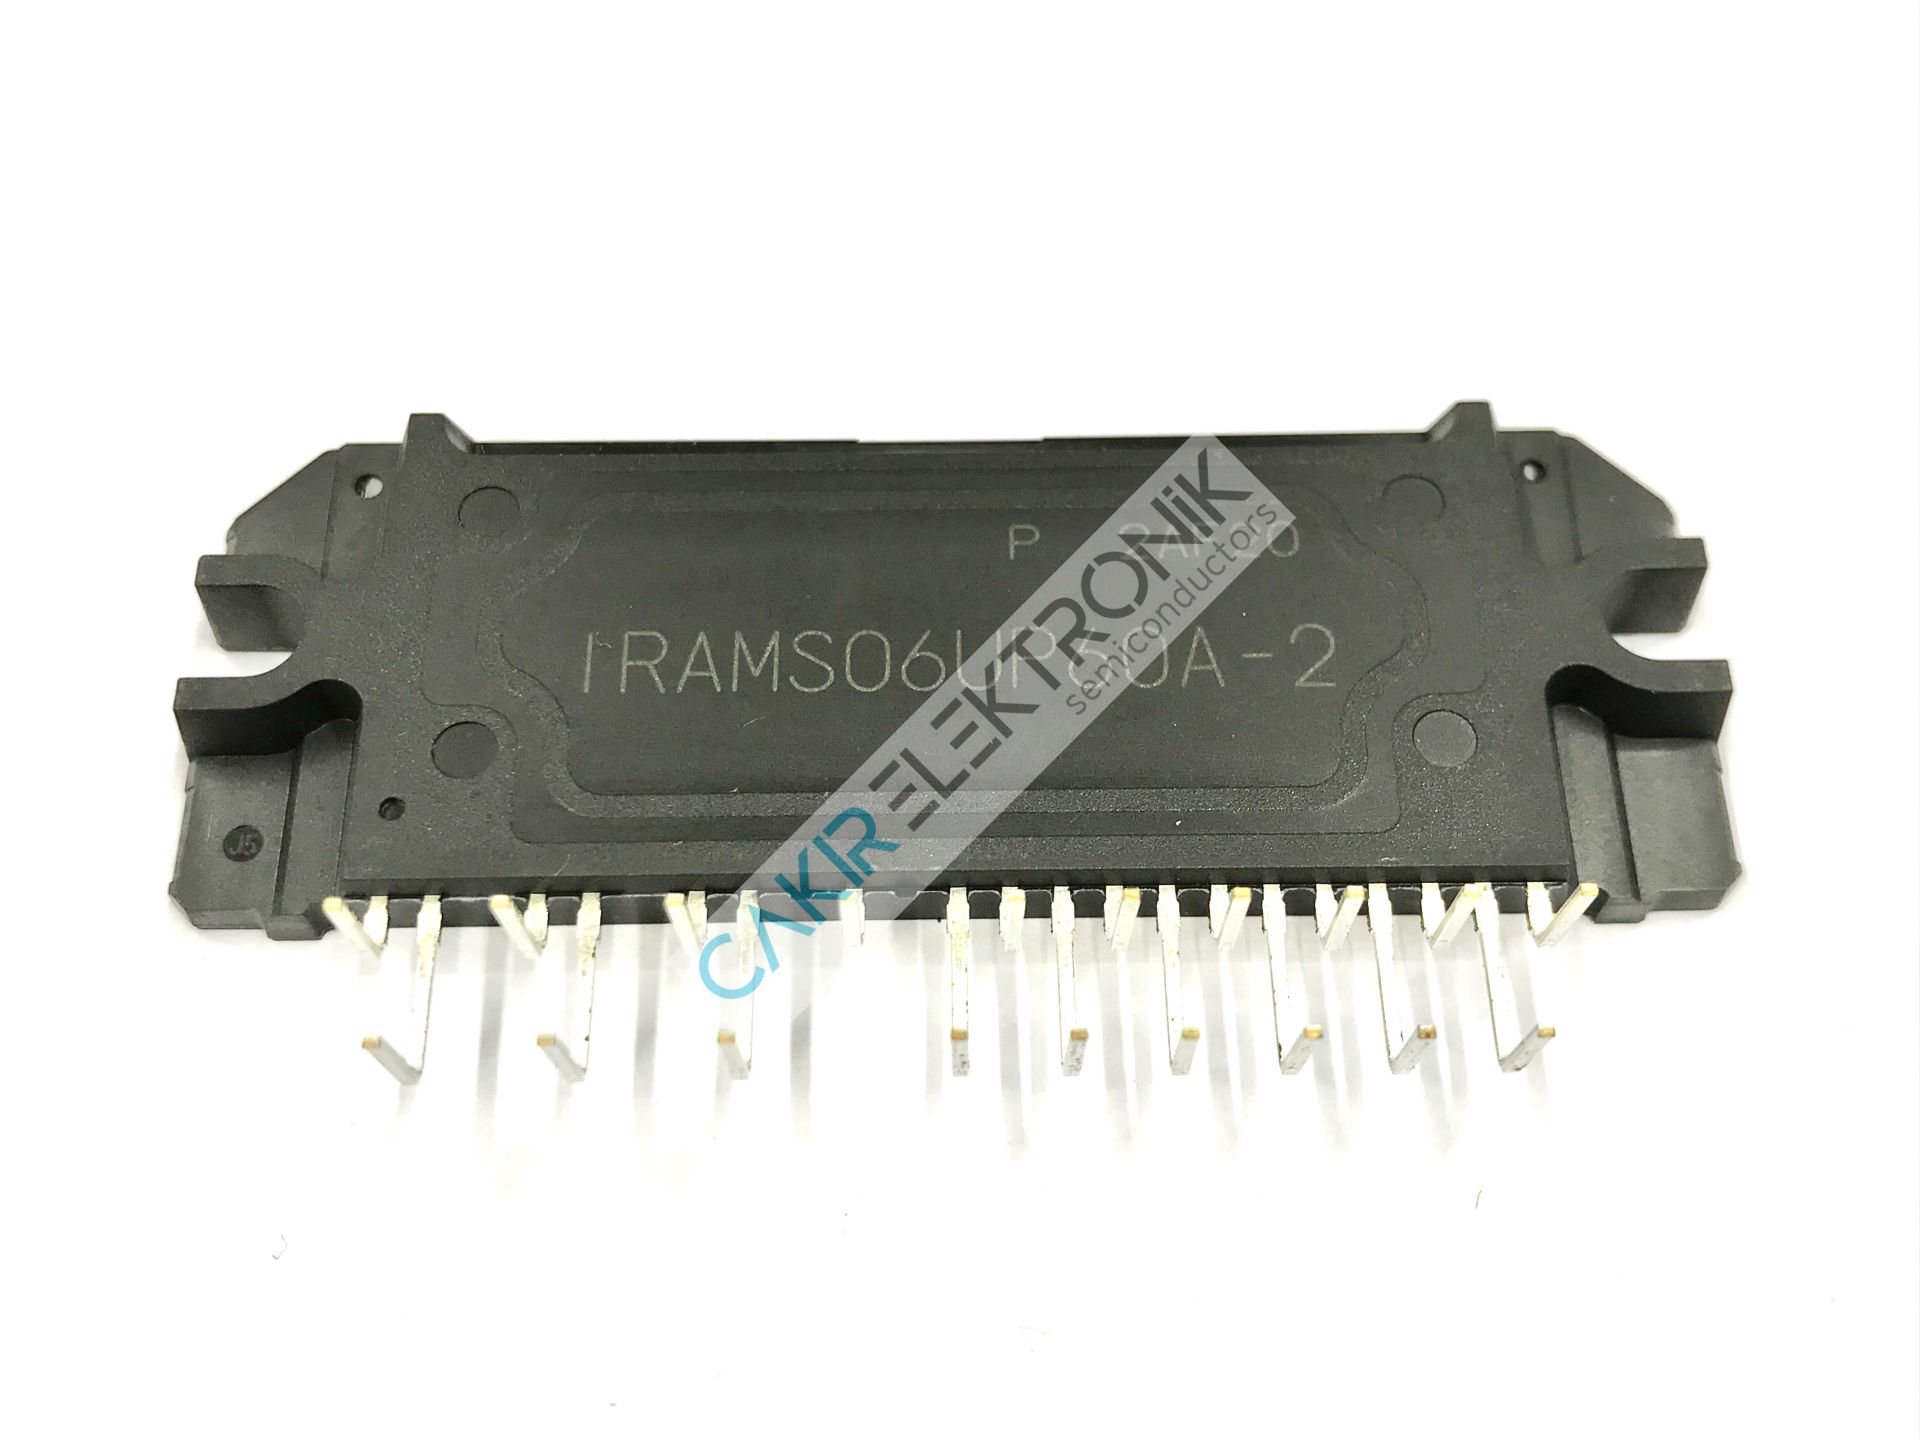 IRAMS06UP60A-2 , IRAMS06UP60A , Power Driver Module IGBT 3 Phase 600 V 6 A 23-PowerSIP Module